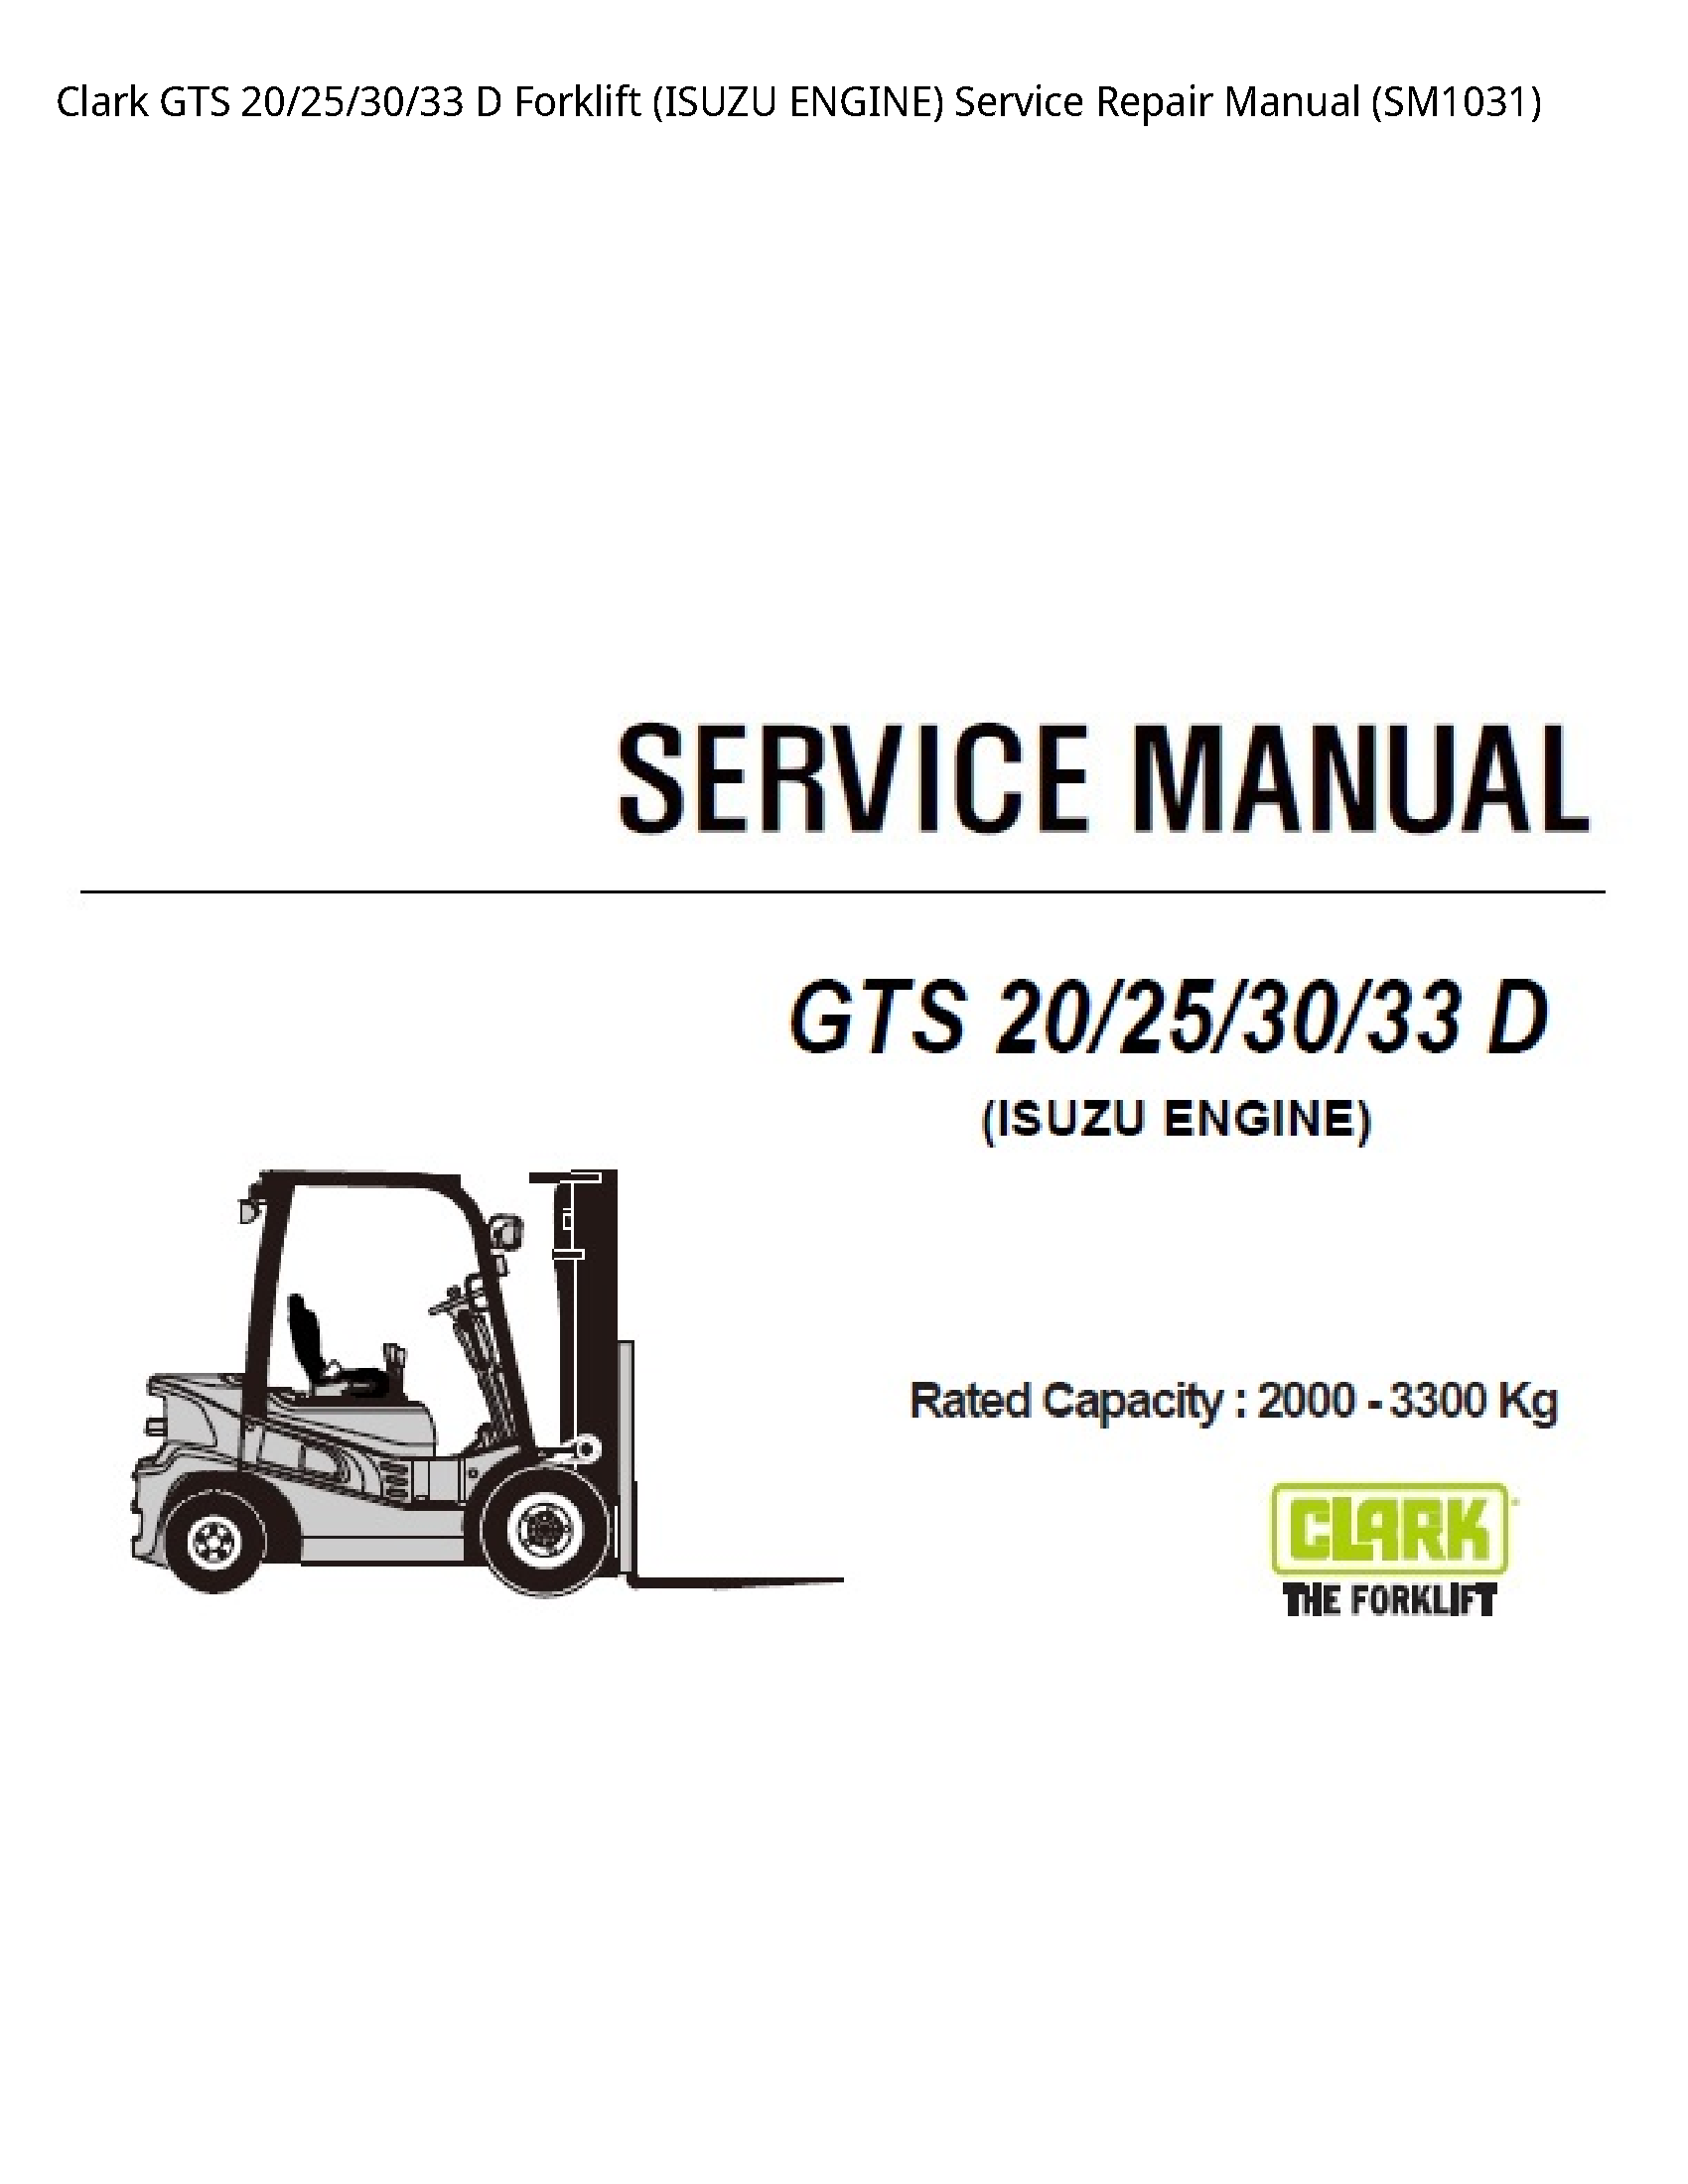 Clark 20 GTS Forklift (ISUZU ENGINE) manual